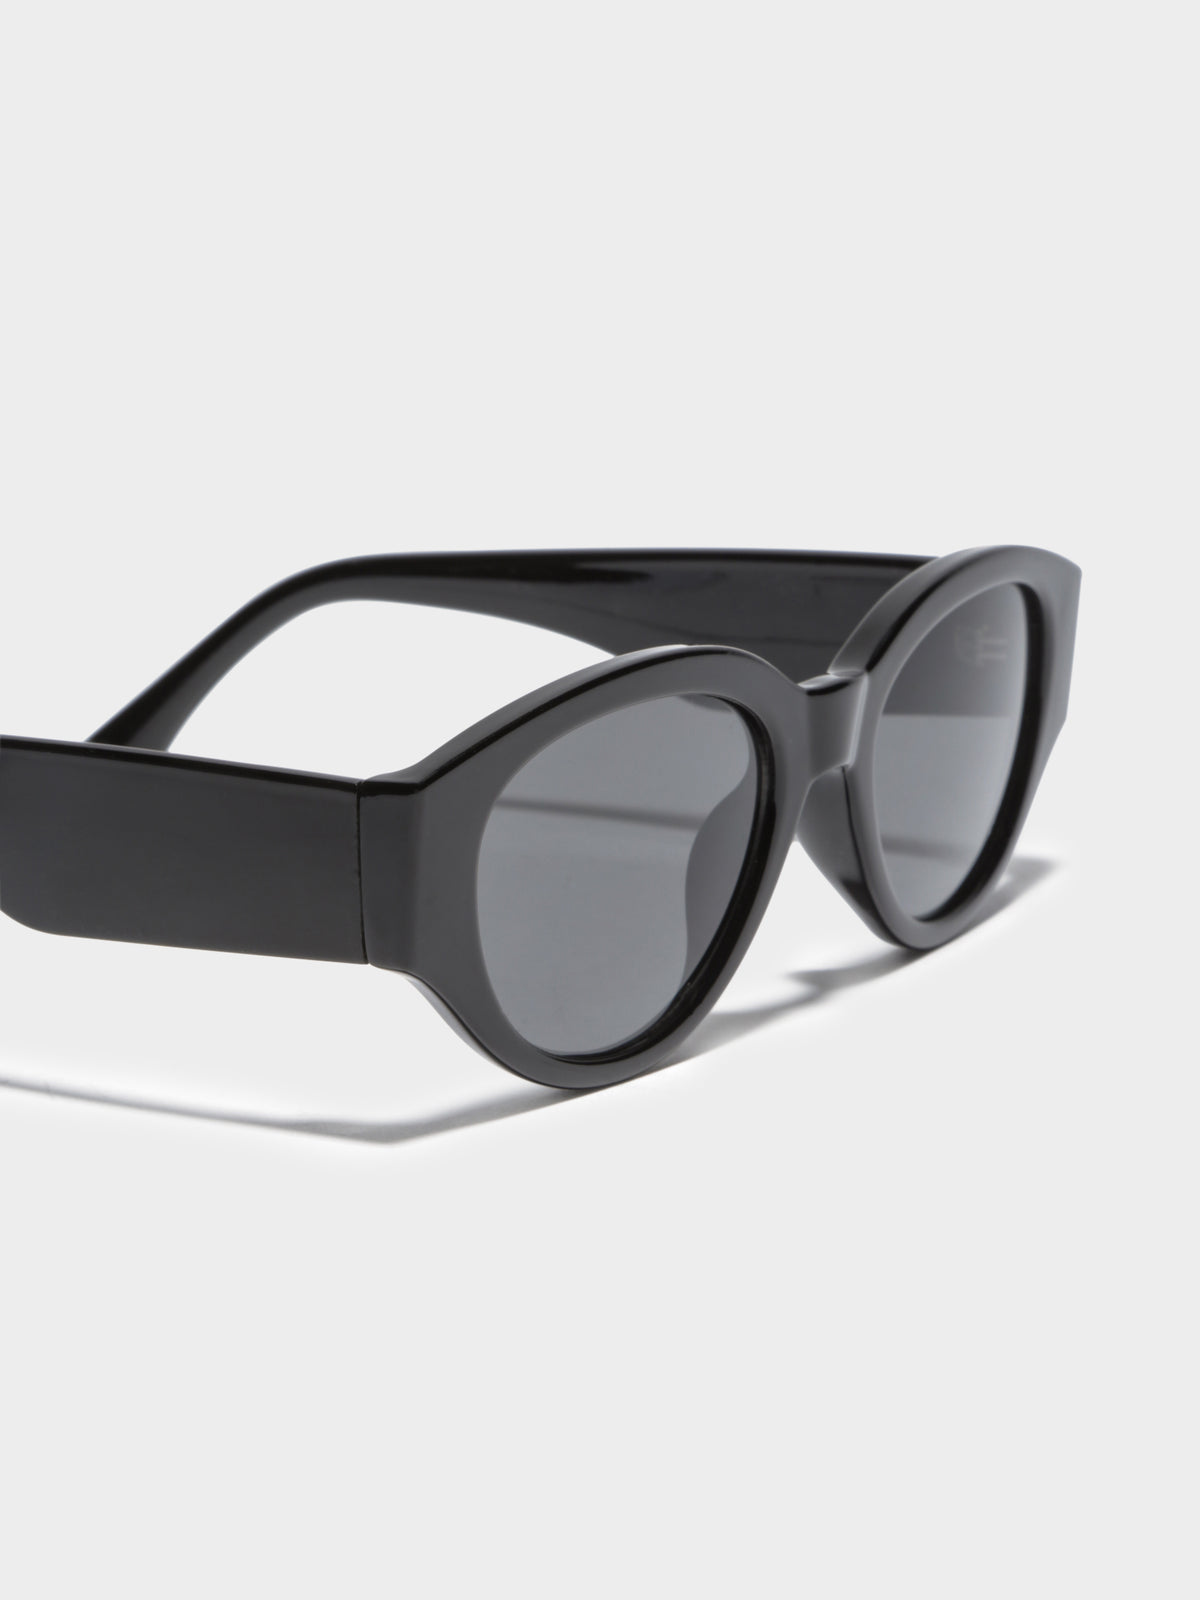 Strict Machine Retro Round Sunglasses in Jett Black